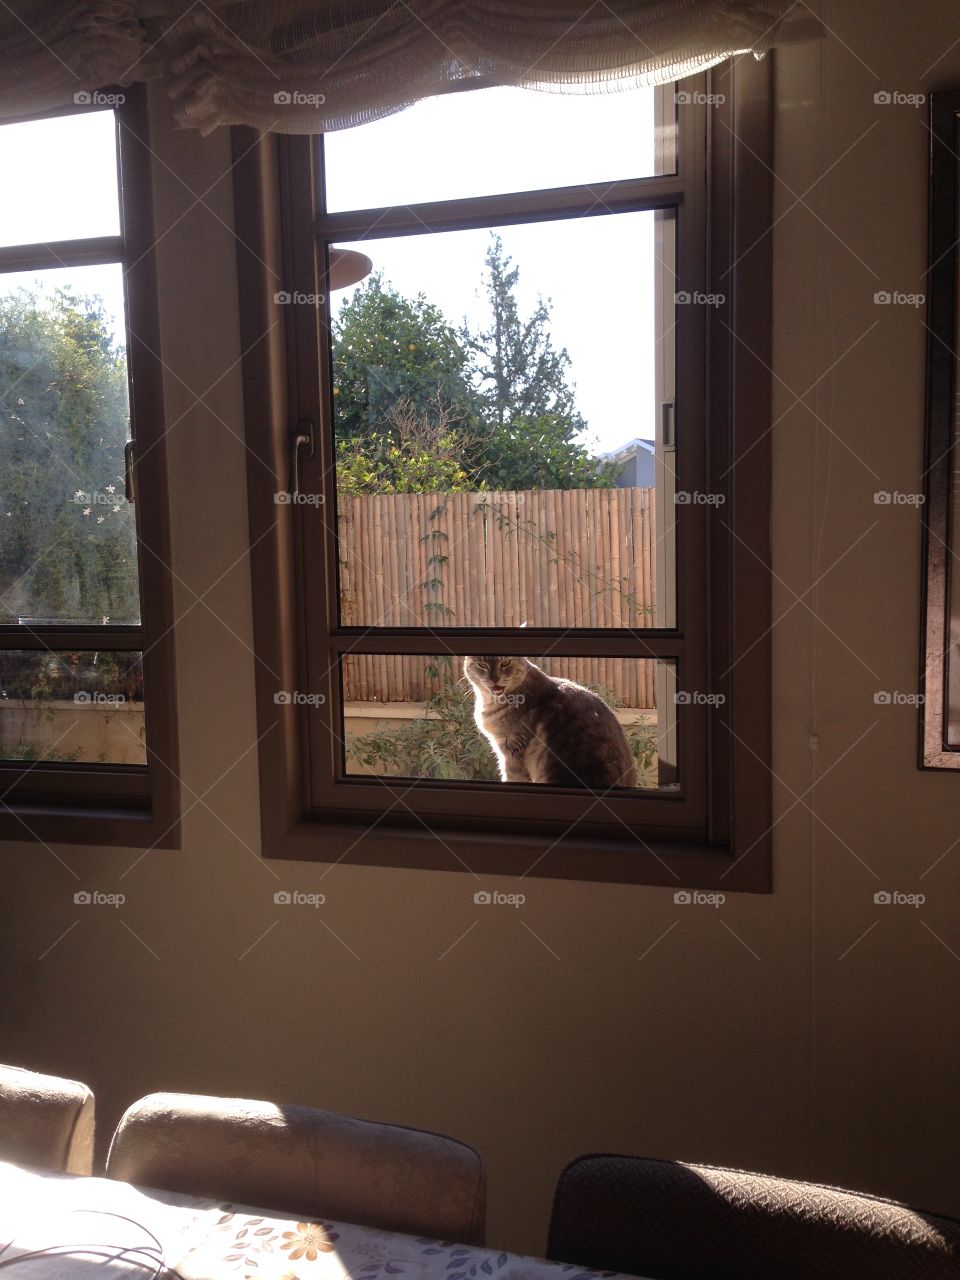 Cat through the window